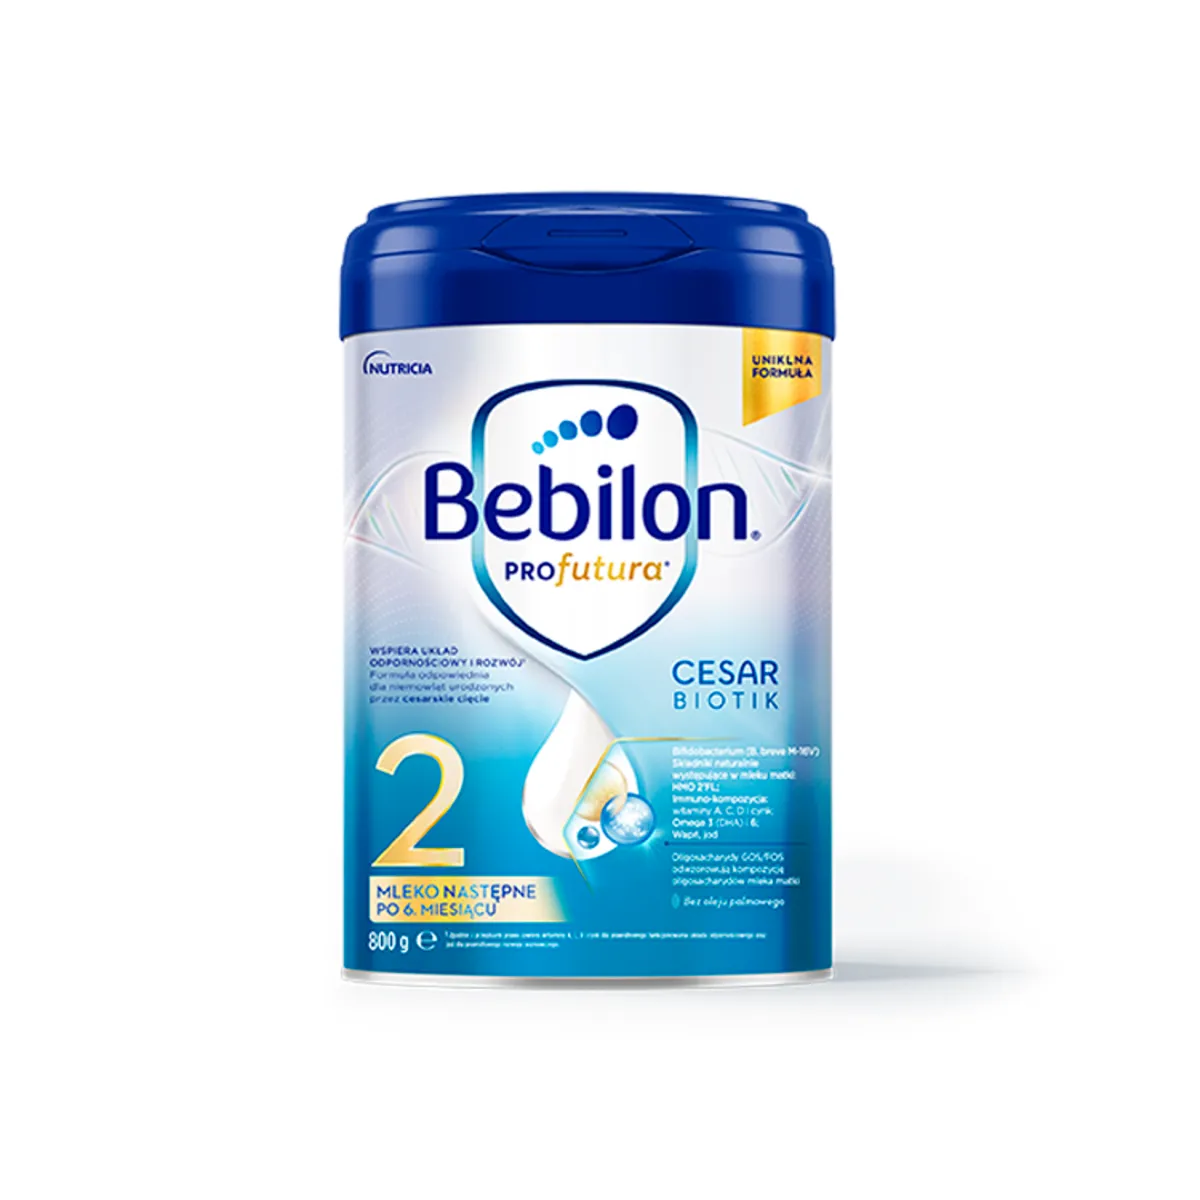 Bebilon Profutura Cesar Biotic 2, mleko następne, po 6 miesiącu, 800 g 